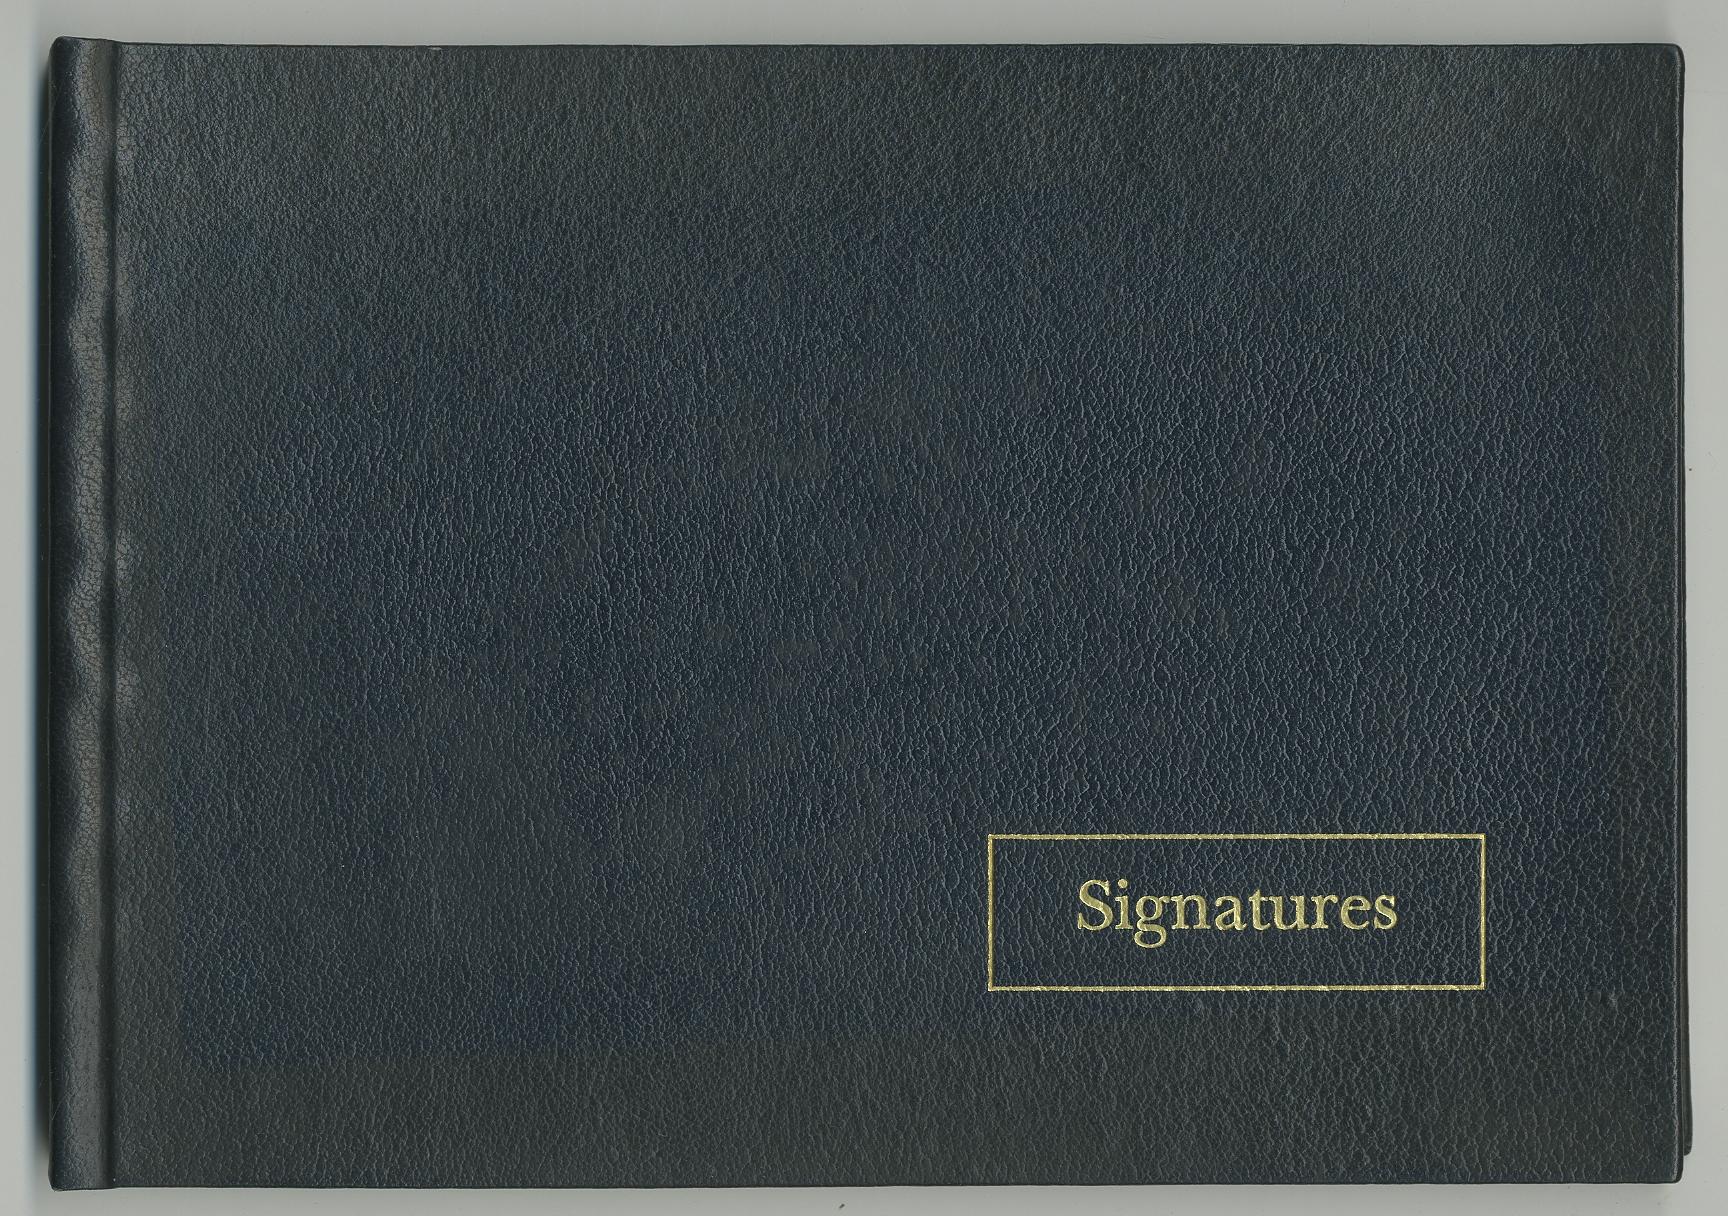 Lord John Signatures